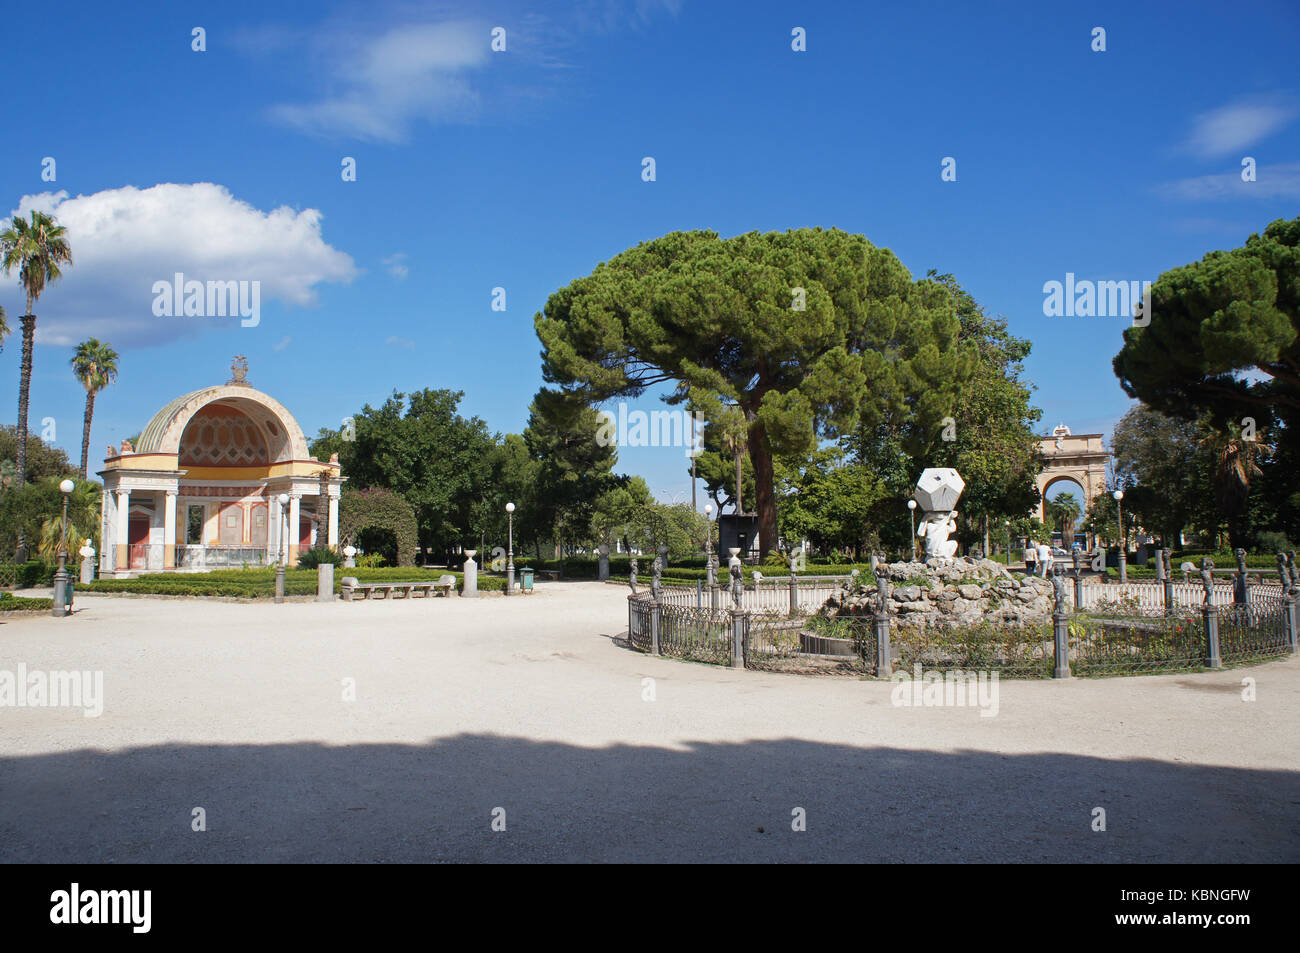 The southern exedra and the central fountain of the Villa Giulia park (Villa del Popolo, Villa Flor) in Palermo, Sicily, Italy Stock Photo